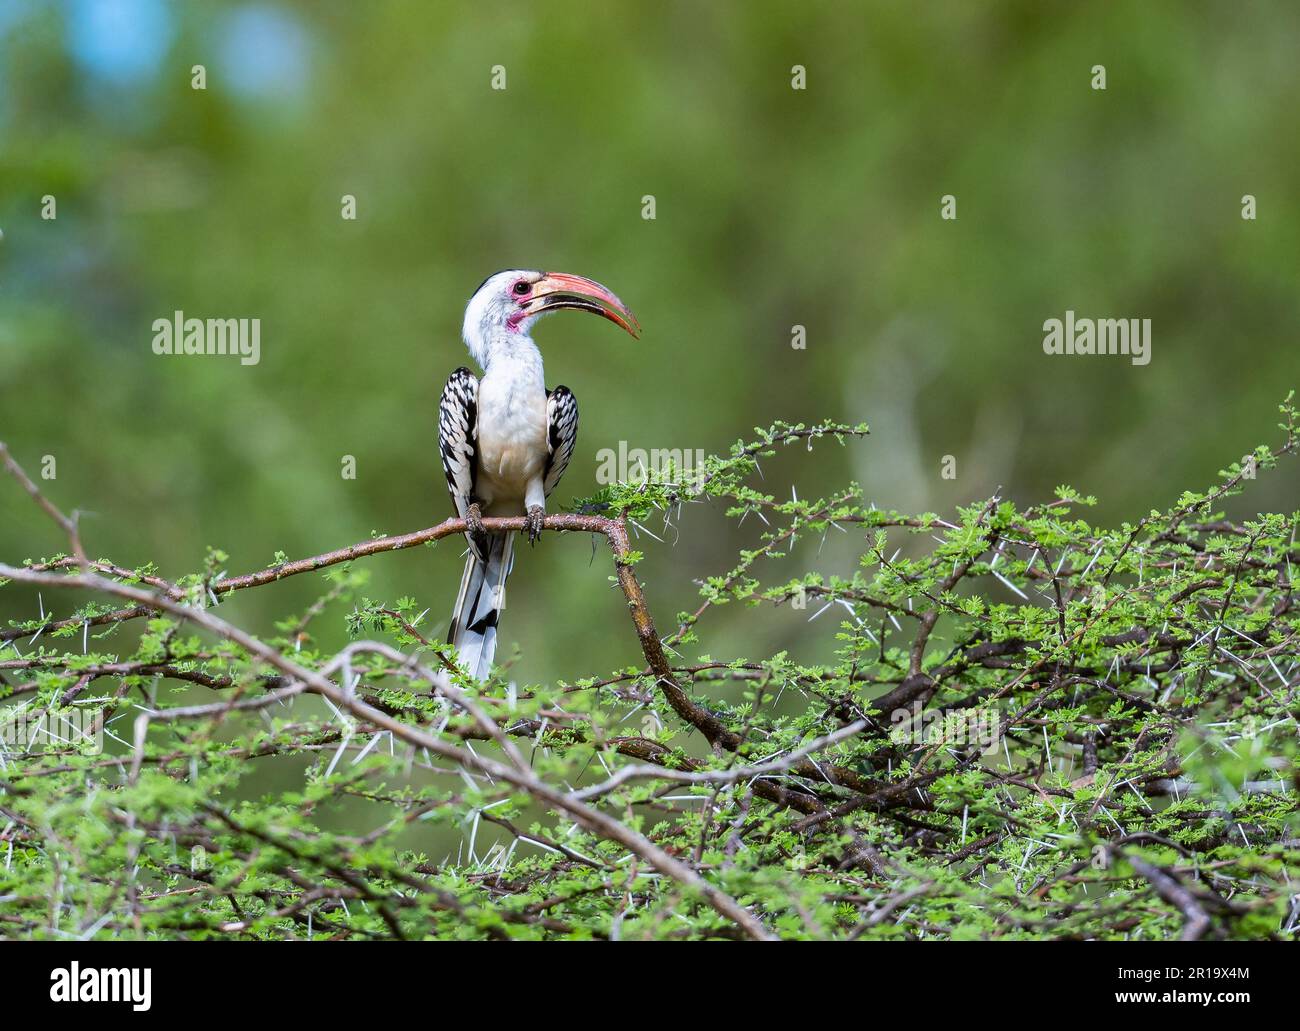 Un Hornbill (Tockus erythrorhynchus) con fattura rossa settentrionale arroccato su un ramo. Kenya, Africa. Foto Stock